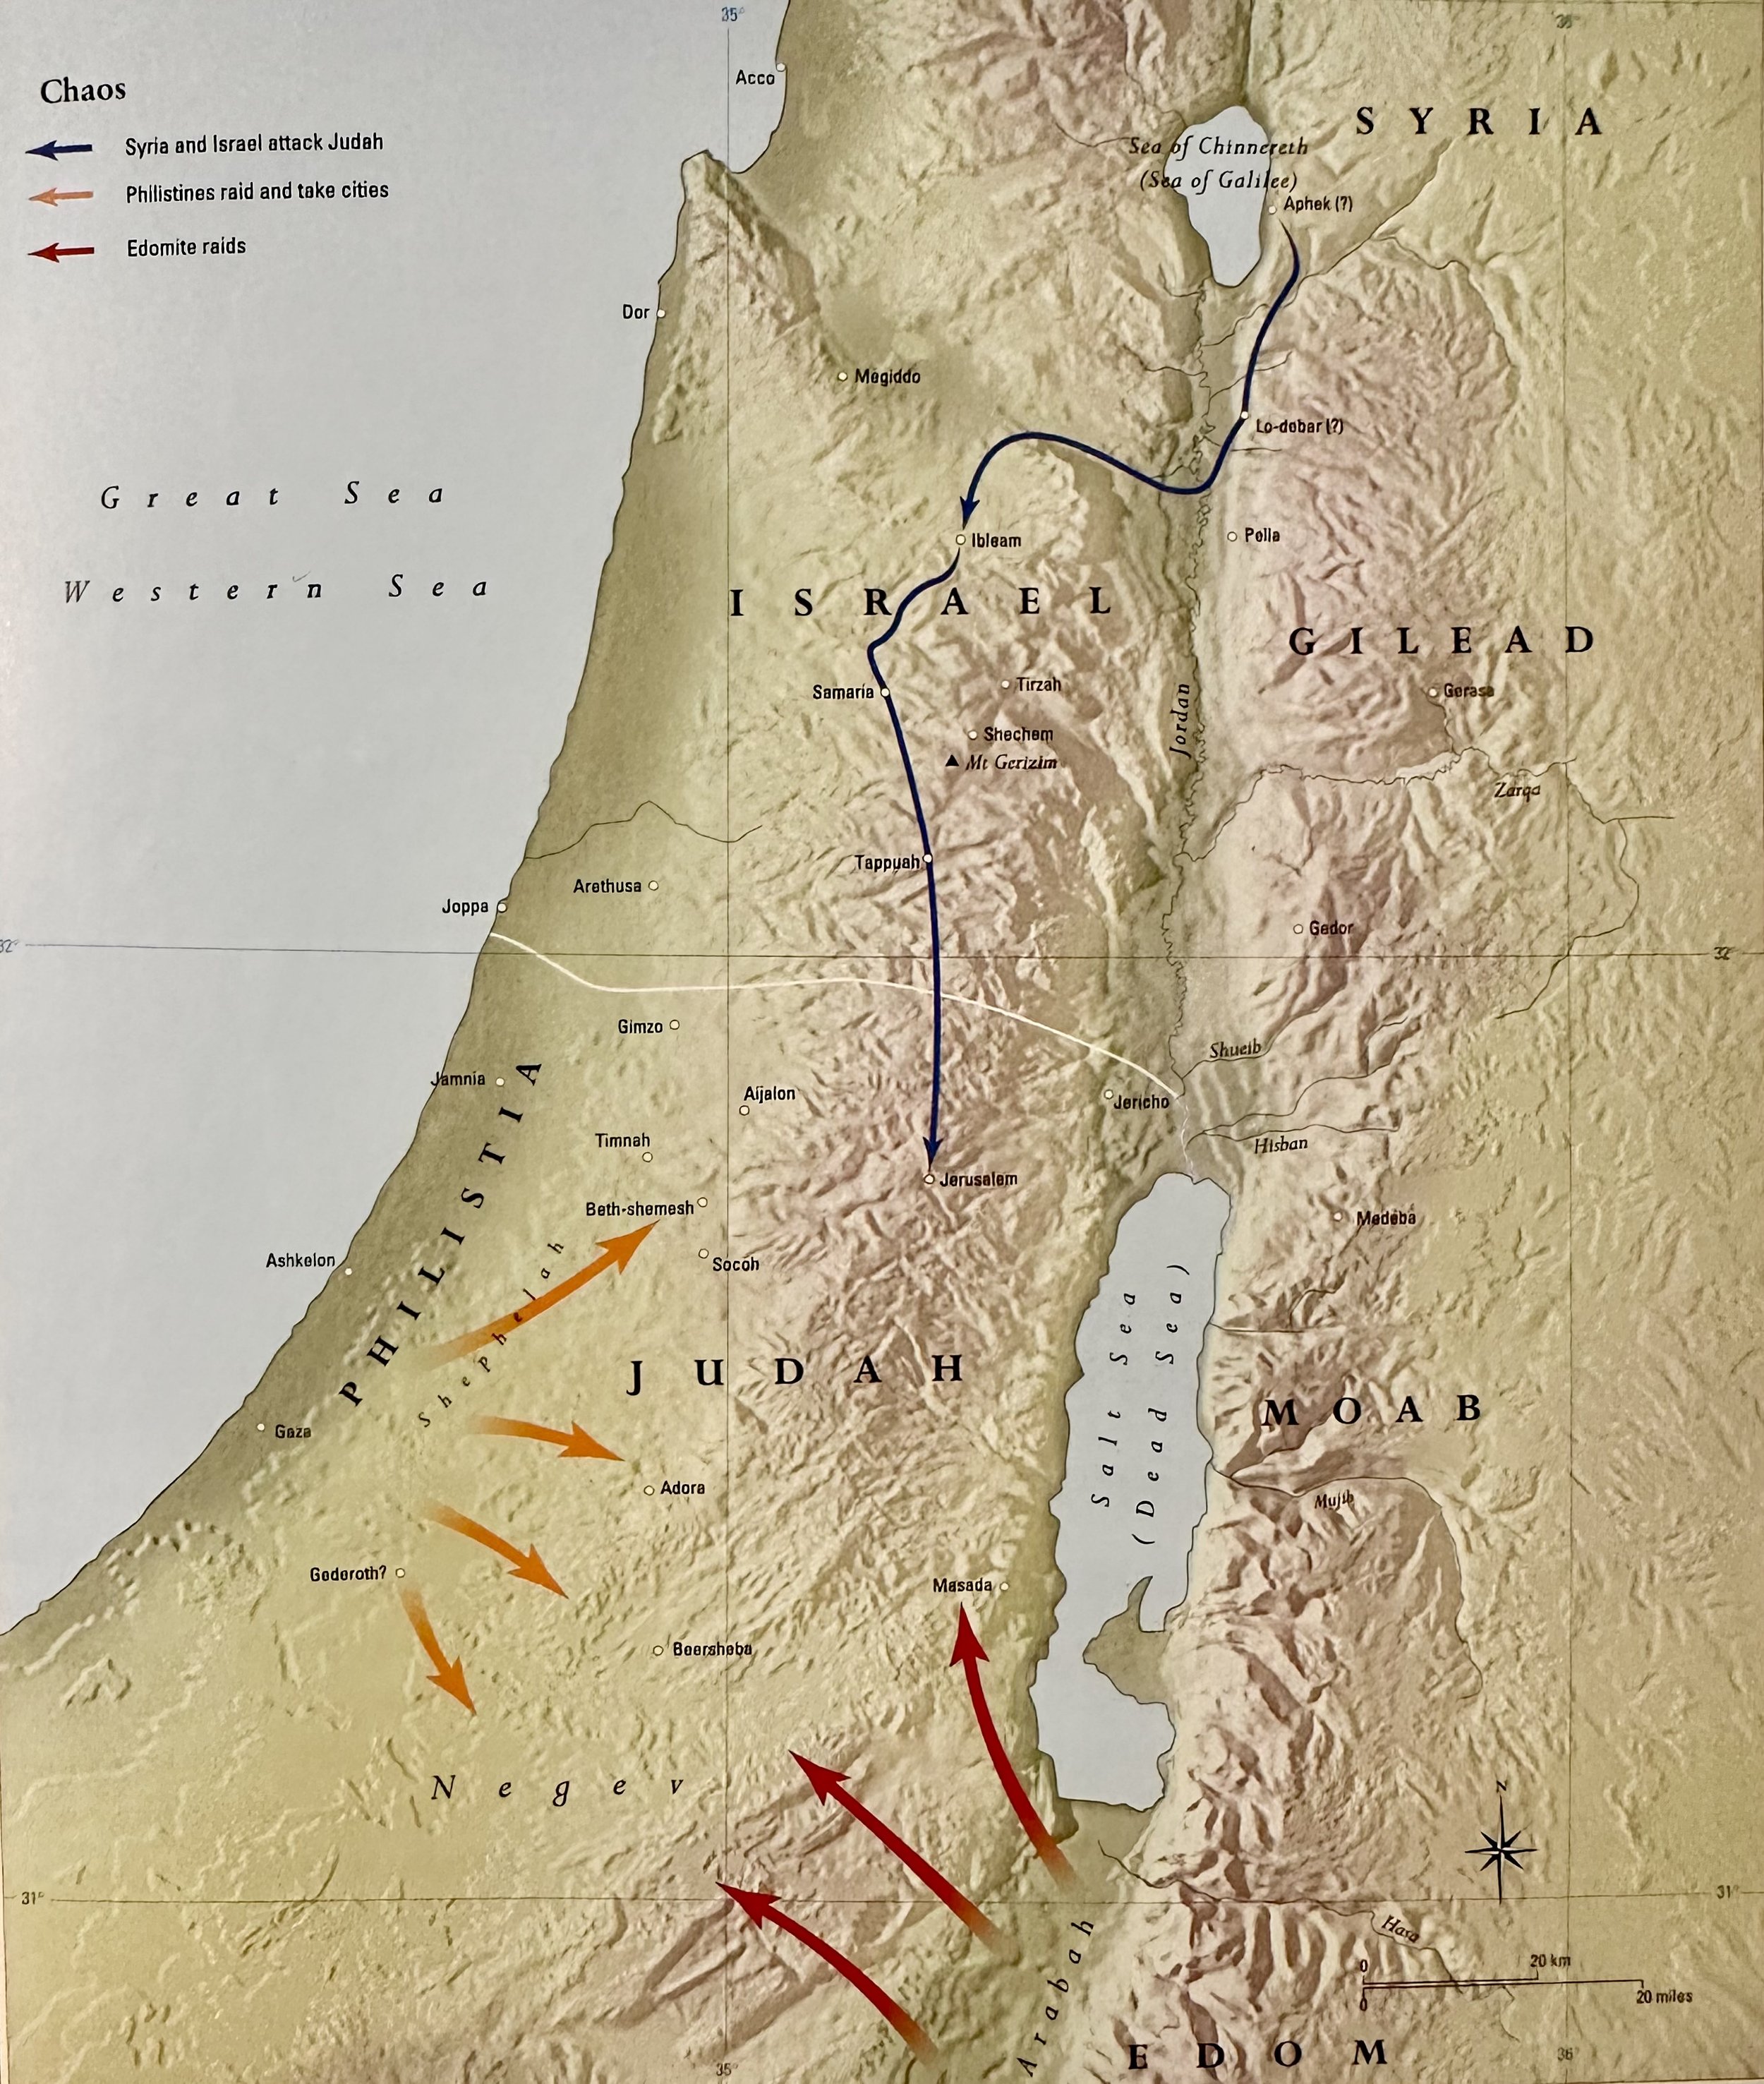 Chaos in Judah Atlas of the Bible.jpeg